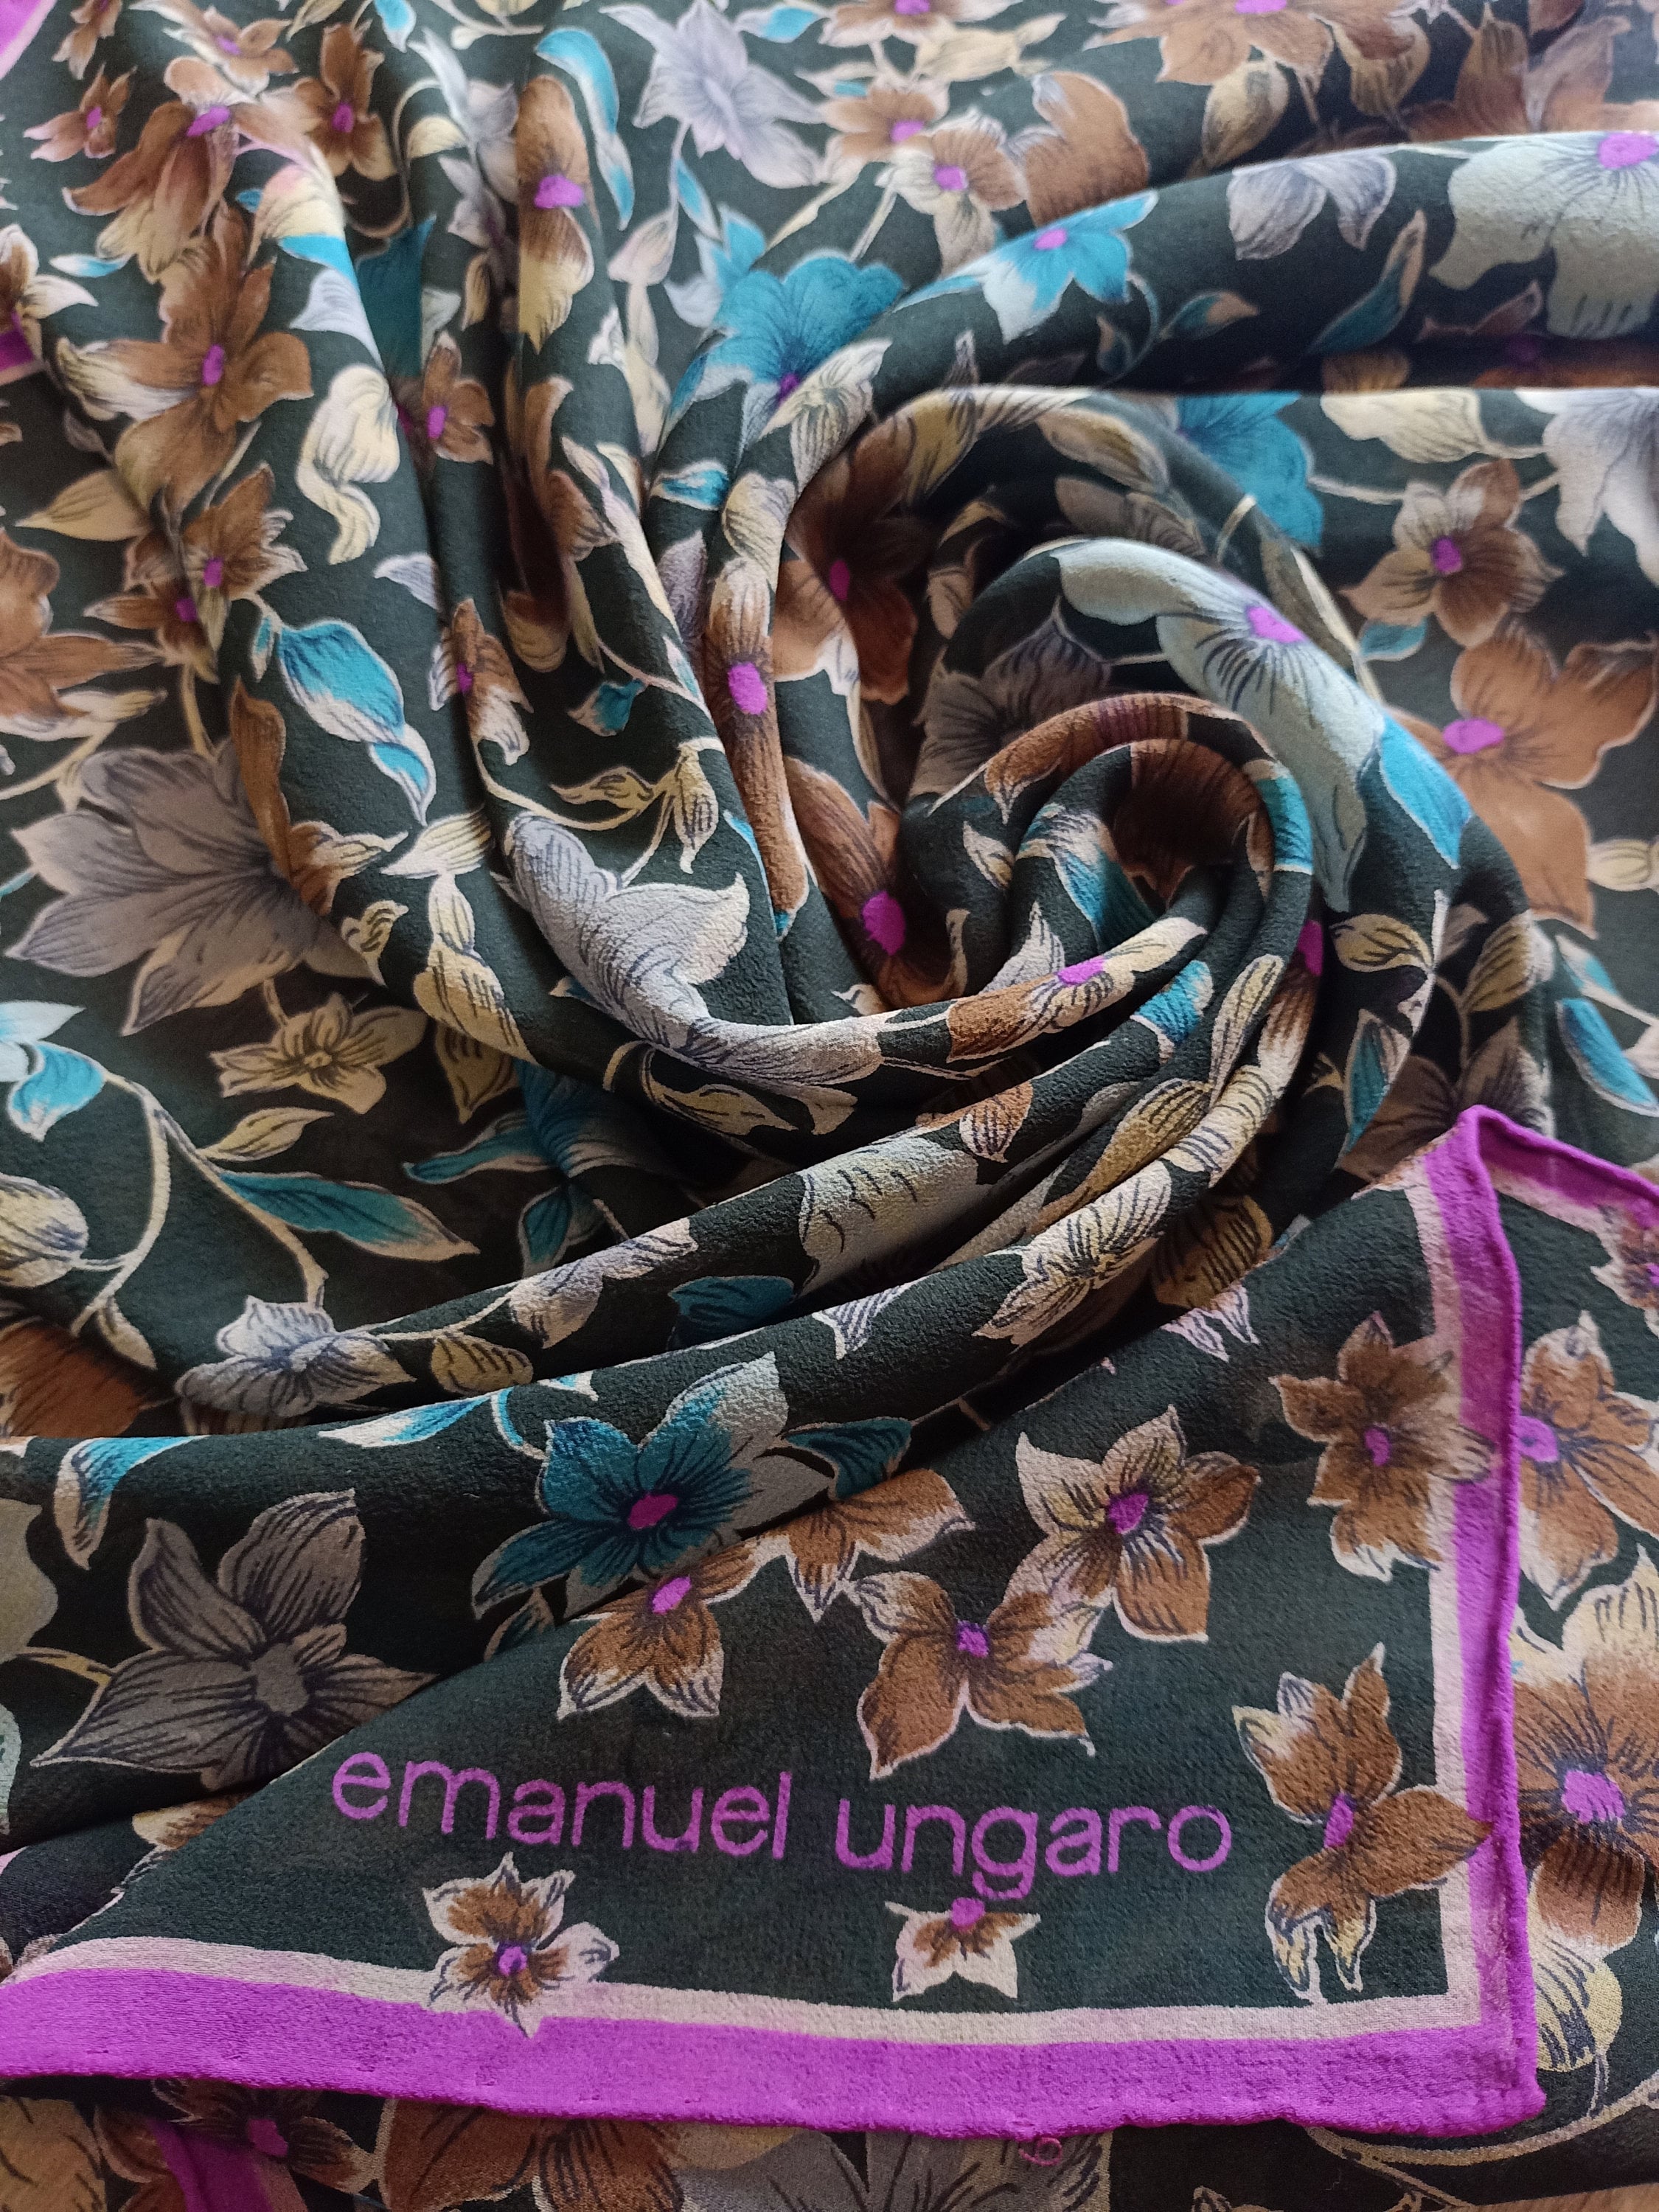 Ungaro Emanuel Printed Scarf, $150, farfetch.com